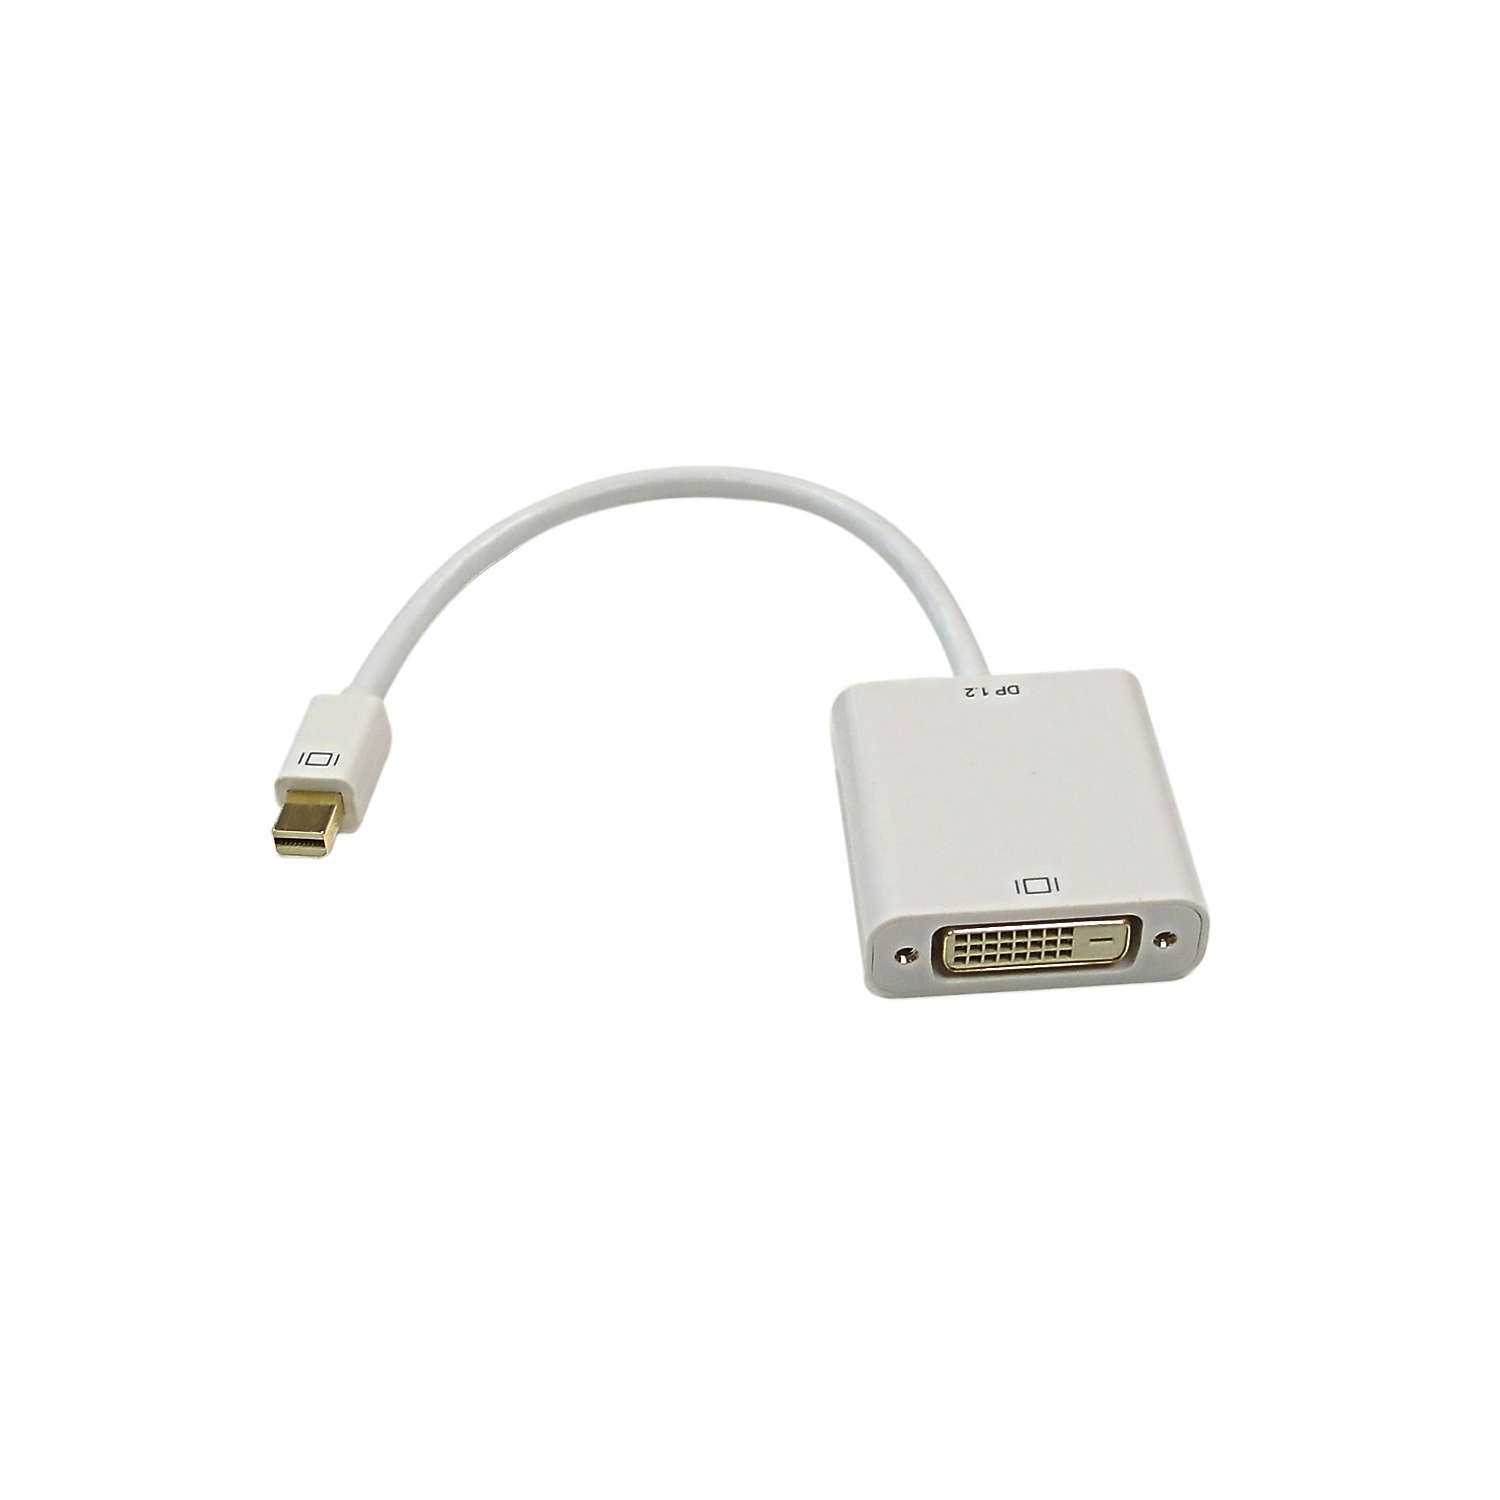 6 inch Mini DisplayPortThunderboltTM Male to DVI Female Adapter White